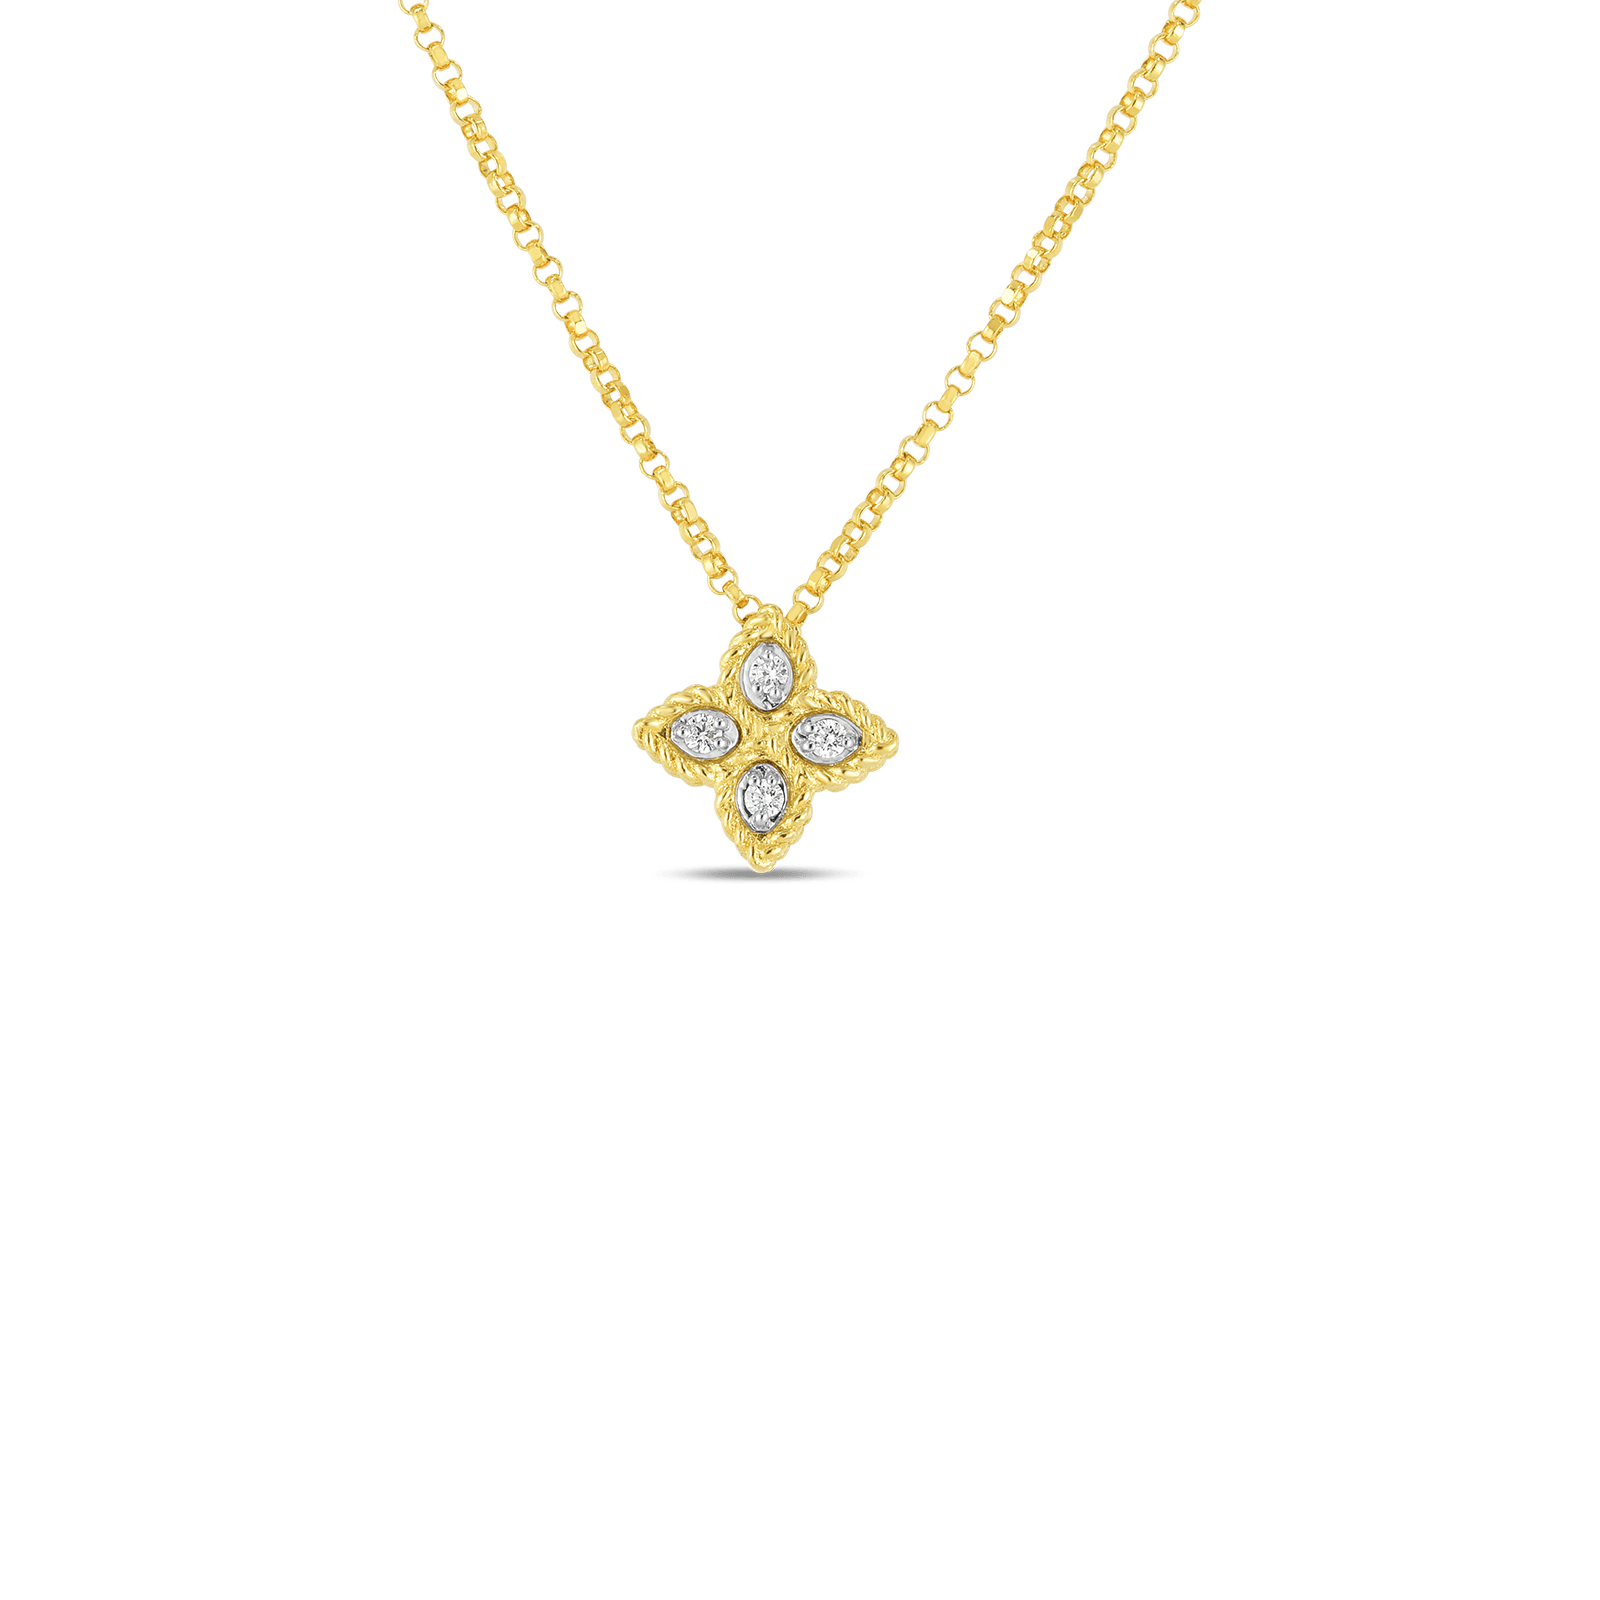 PRINCESS FLOWER PENDANT WITH DIAMONDS - Roberto Coin